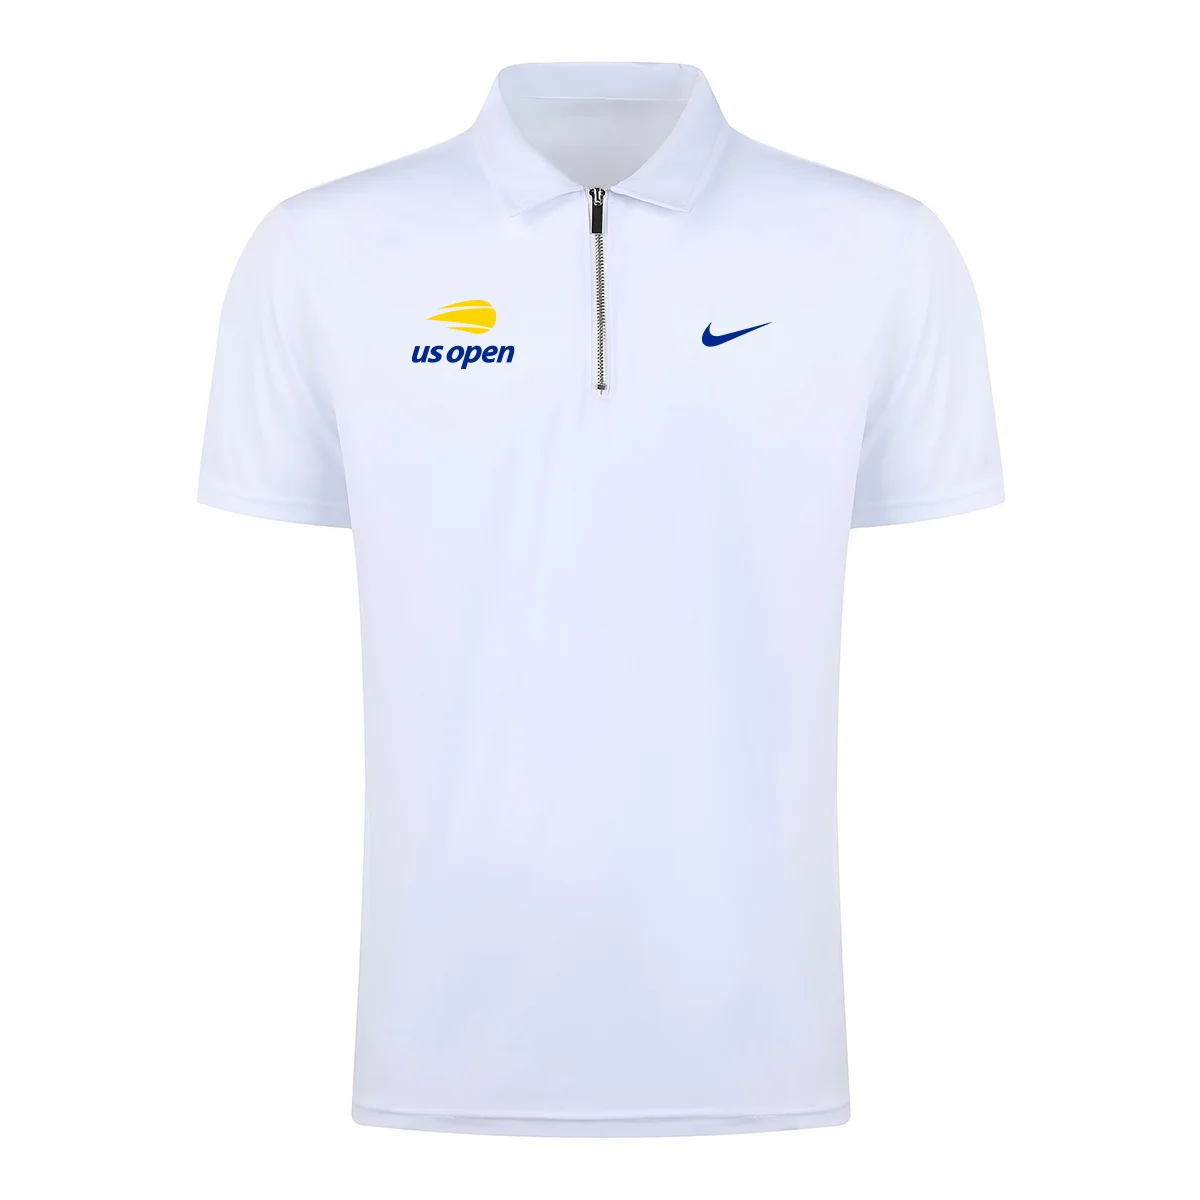 Sport US Open Tennis Adidas Zip-Up Polo Shirt HOUST220624A02AD